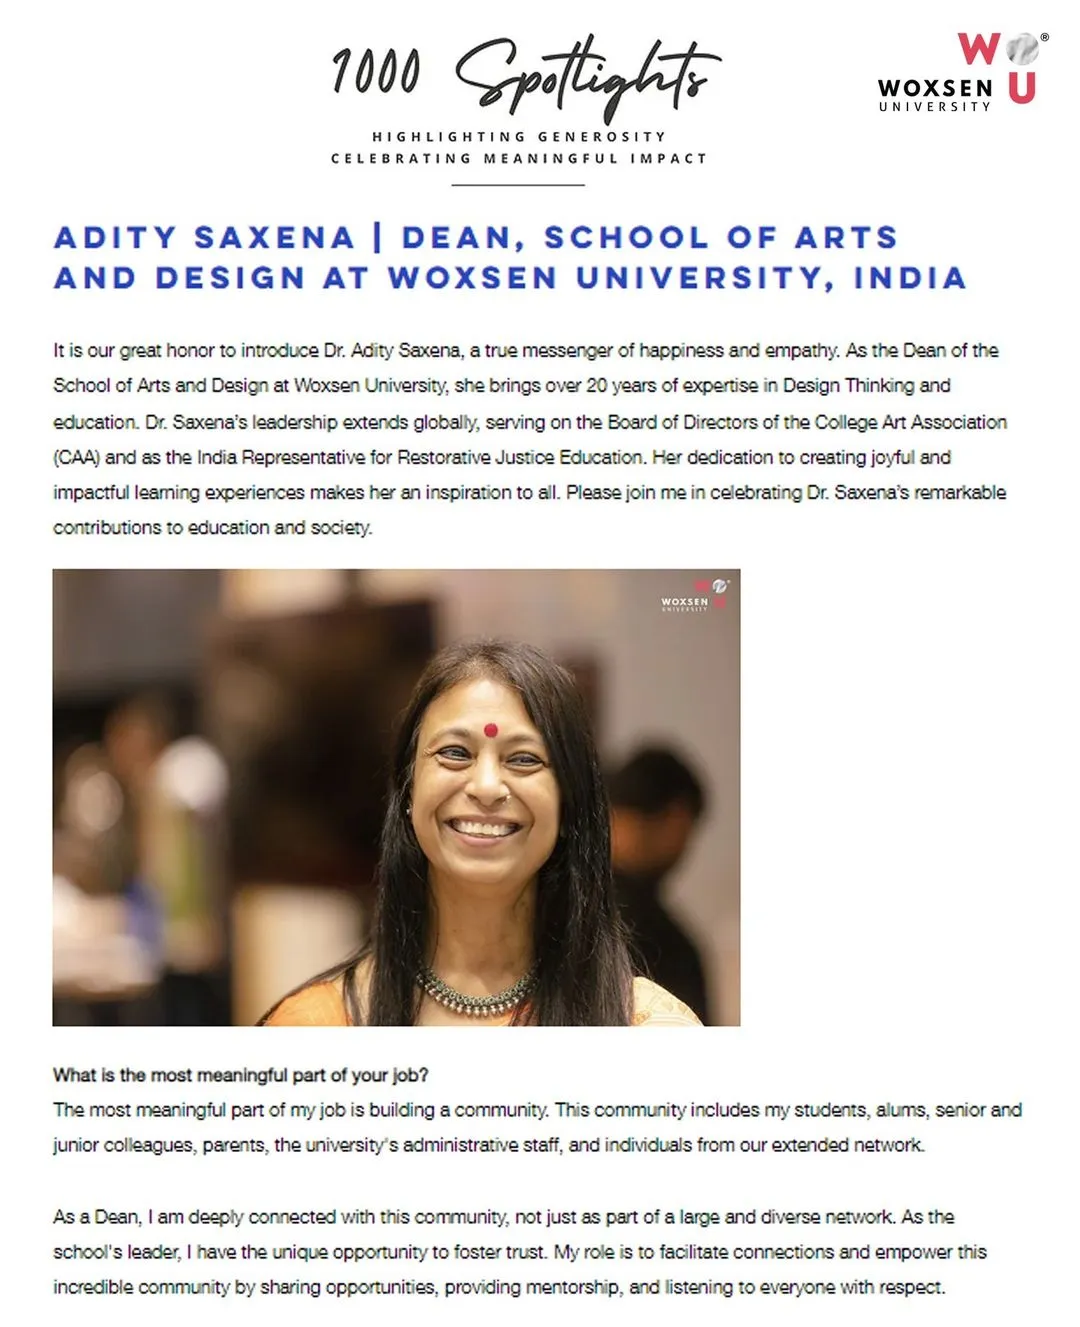 Dr. Adity Saxena, PhD, Dean - School of Arts & Design, Woxsen University featured in 1000 Spotlights magazine